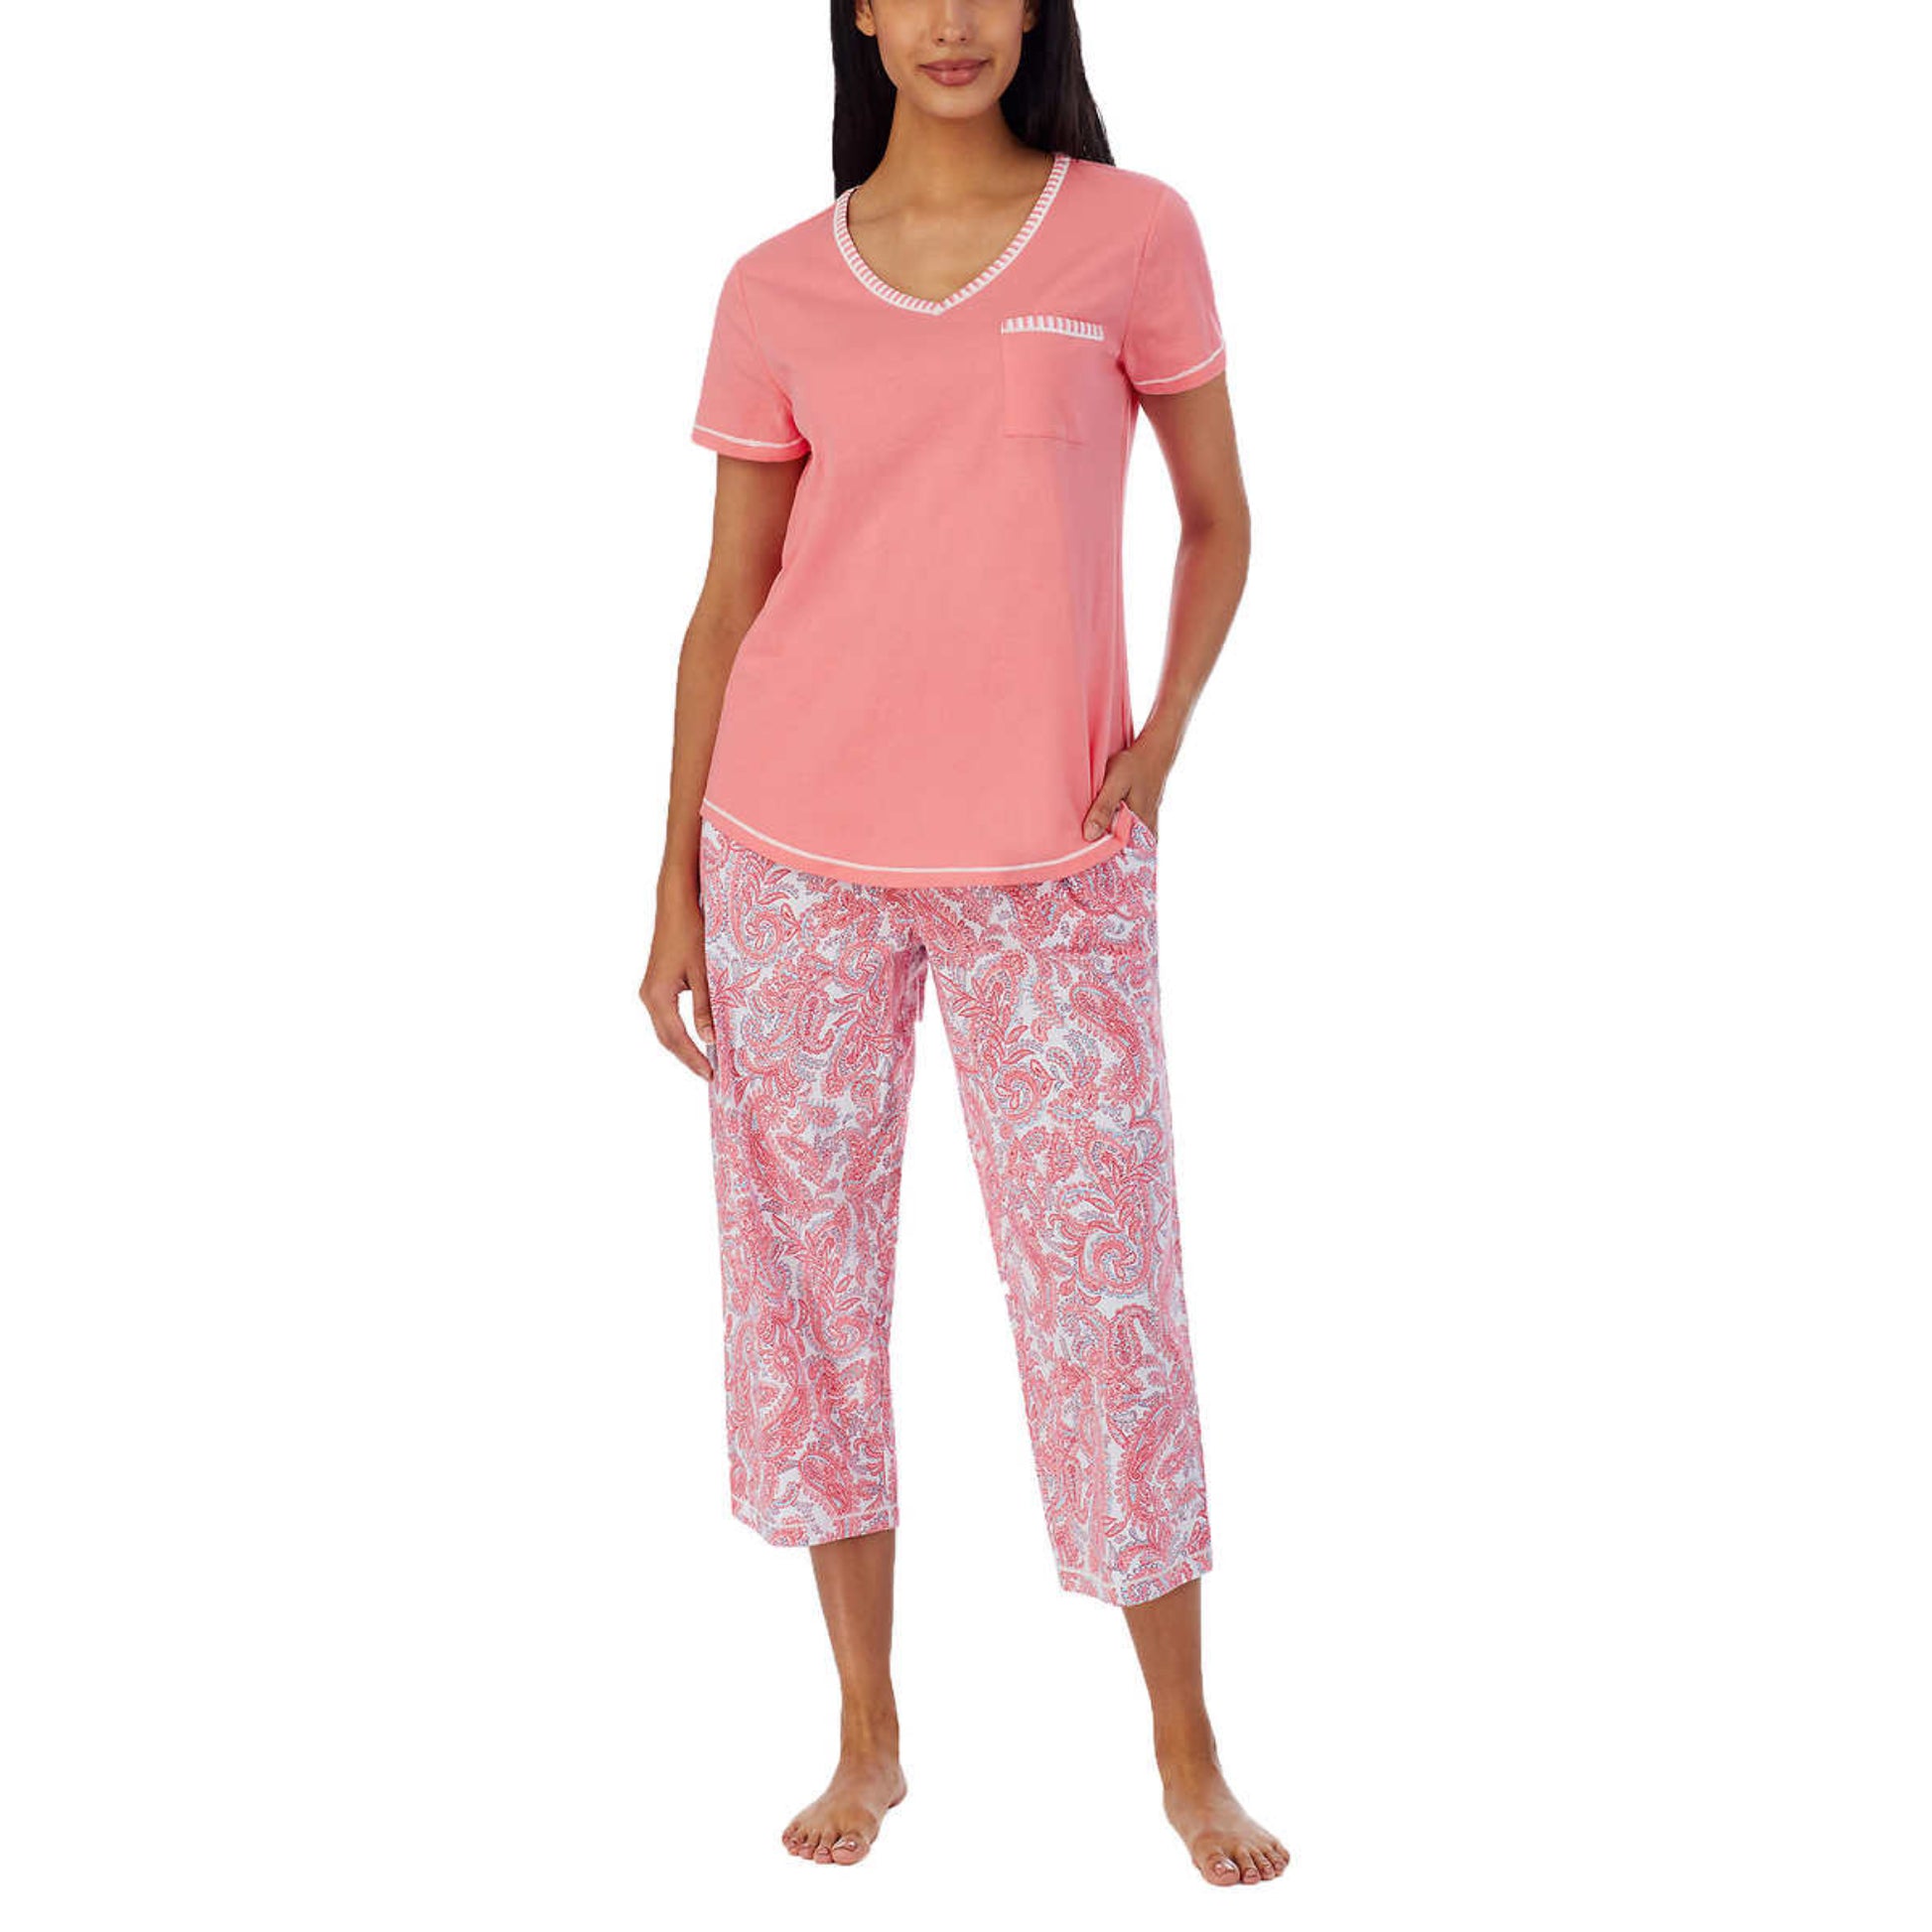 Carole Hochman Womens 2-Pc. Floral Top & Pants Sleep Set